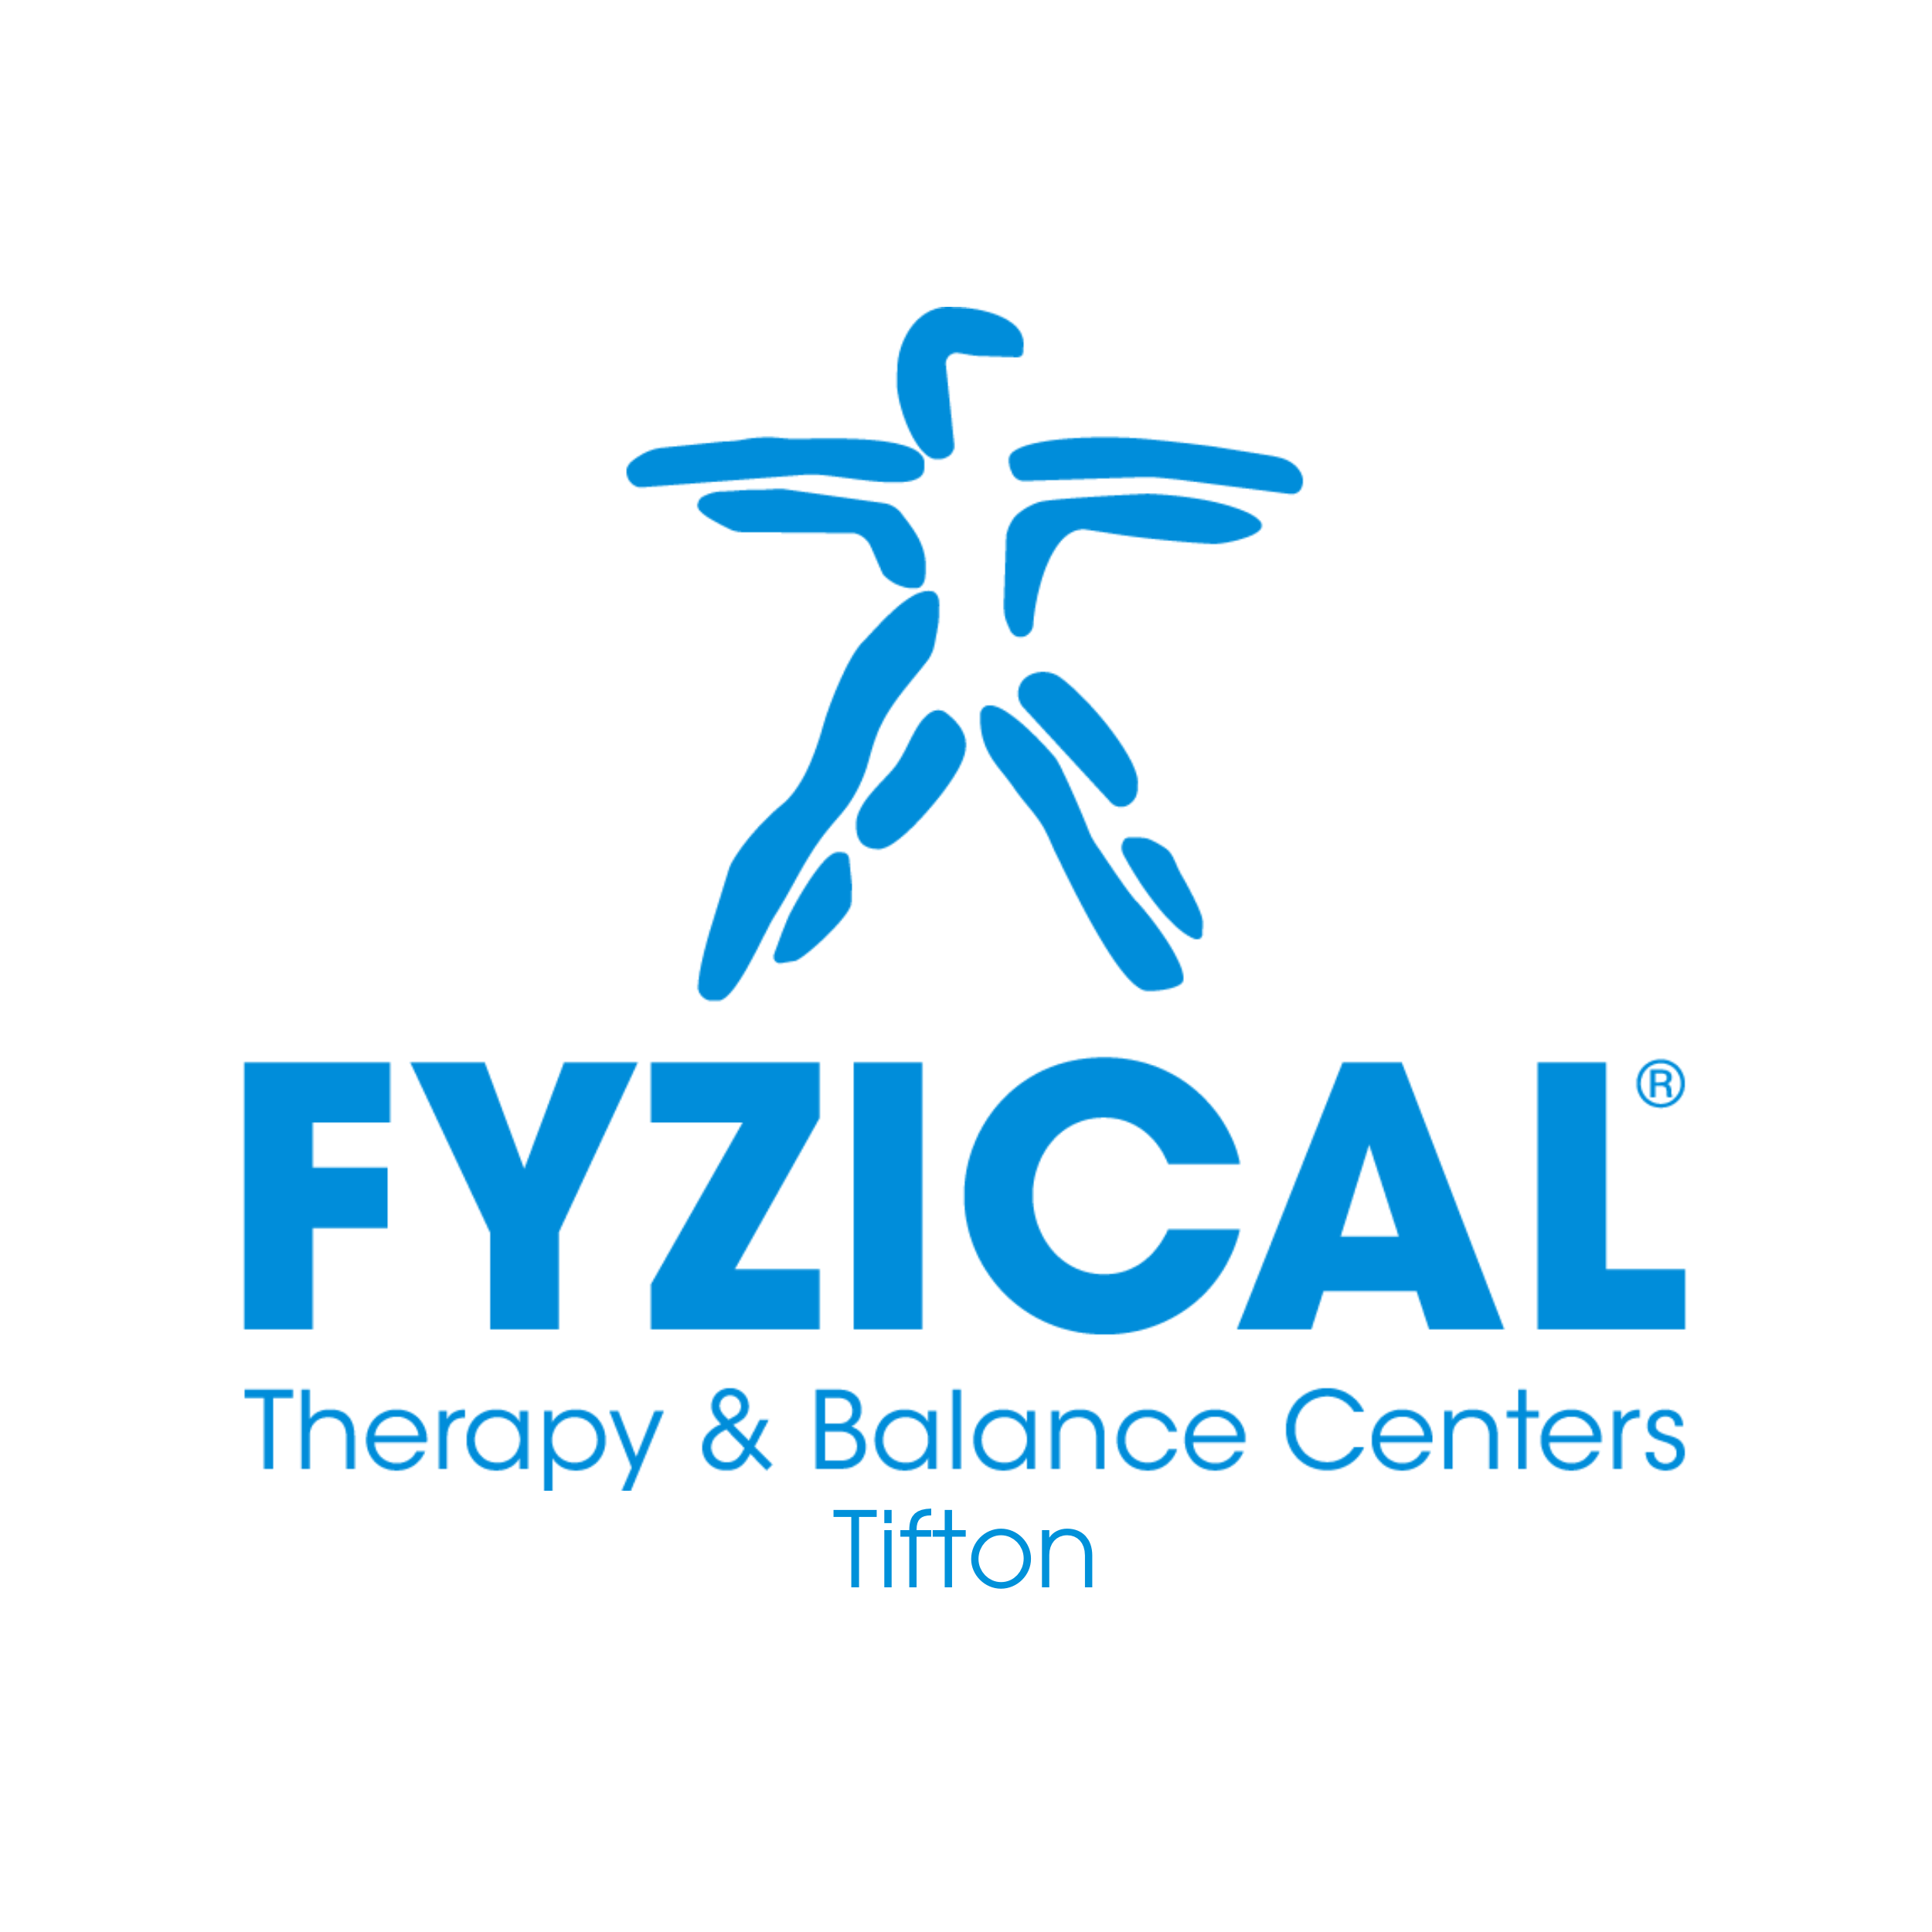 FYZICAL Therapy & Balance Centers Tifton Logo